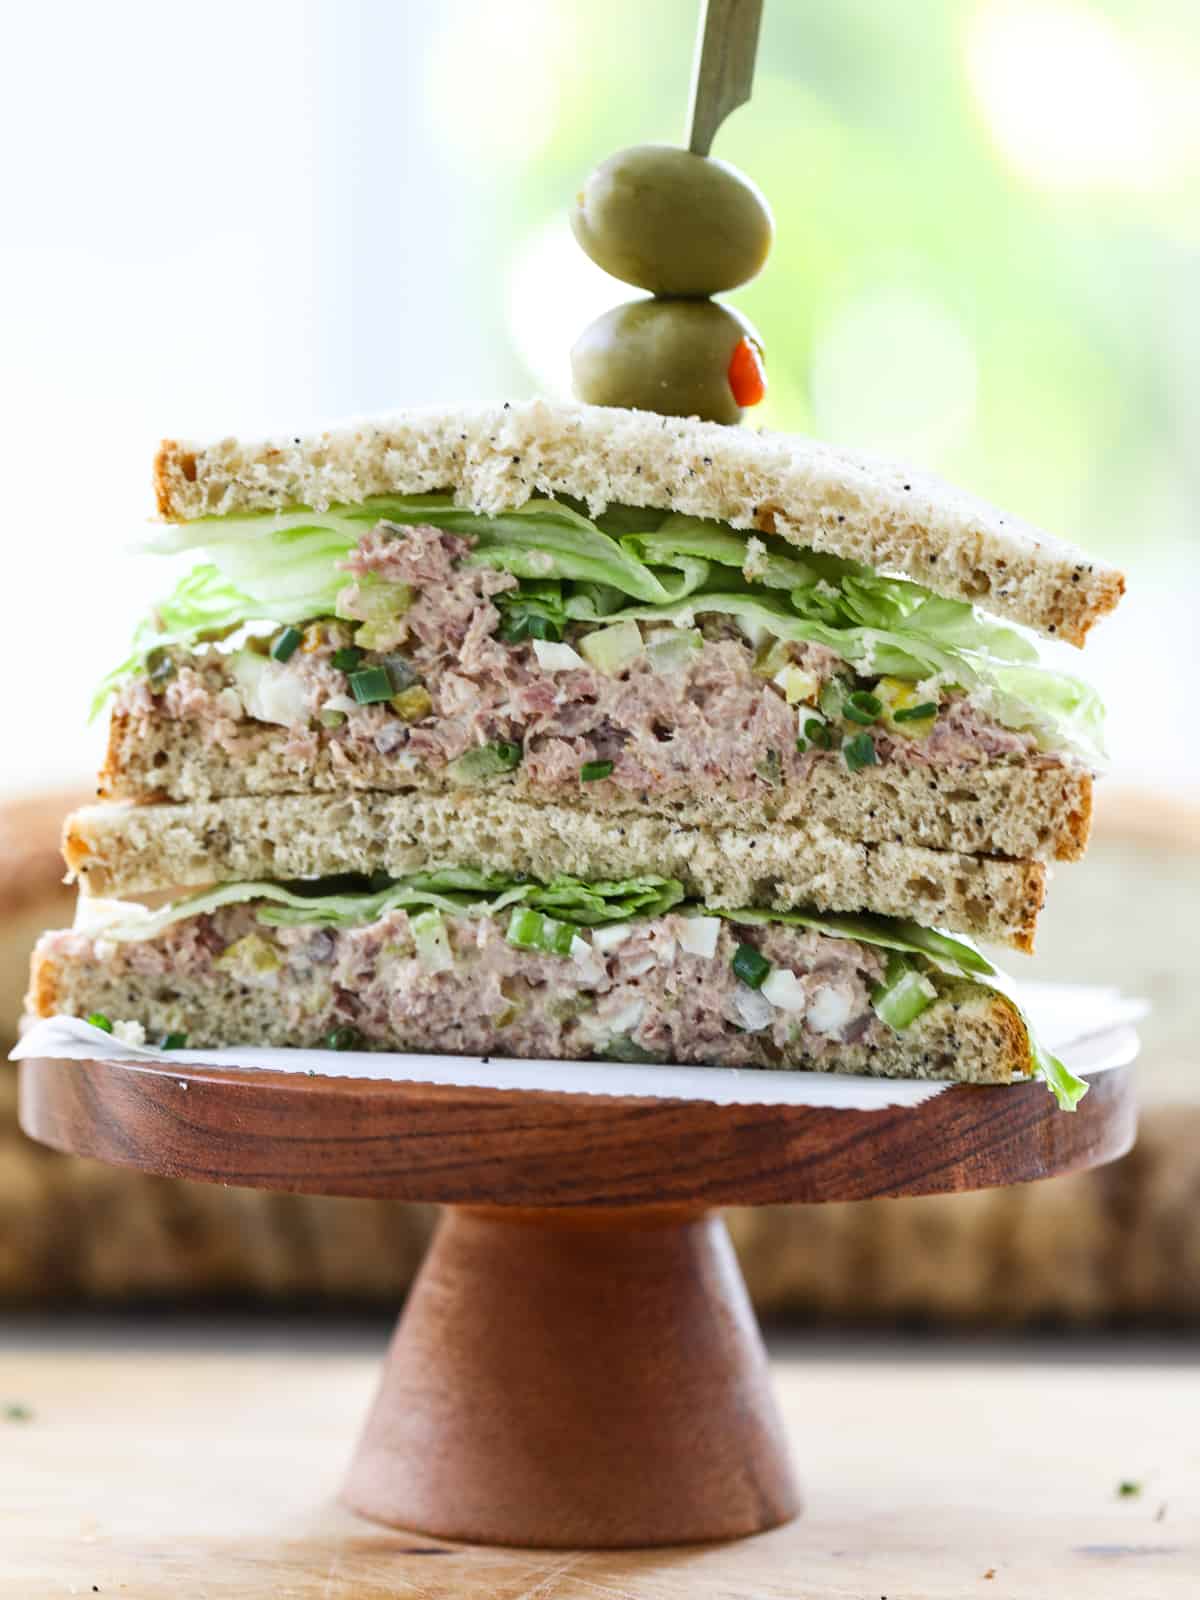 Ham salad on a sandwich sliced in half with an olive garnish. 